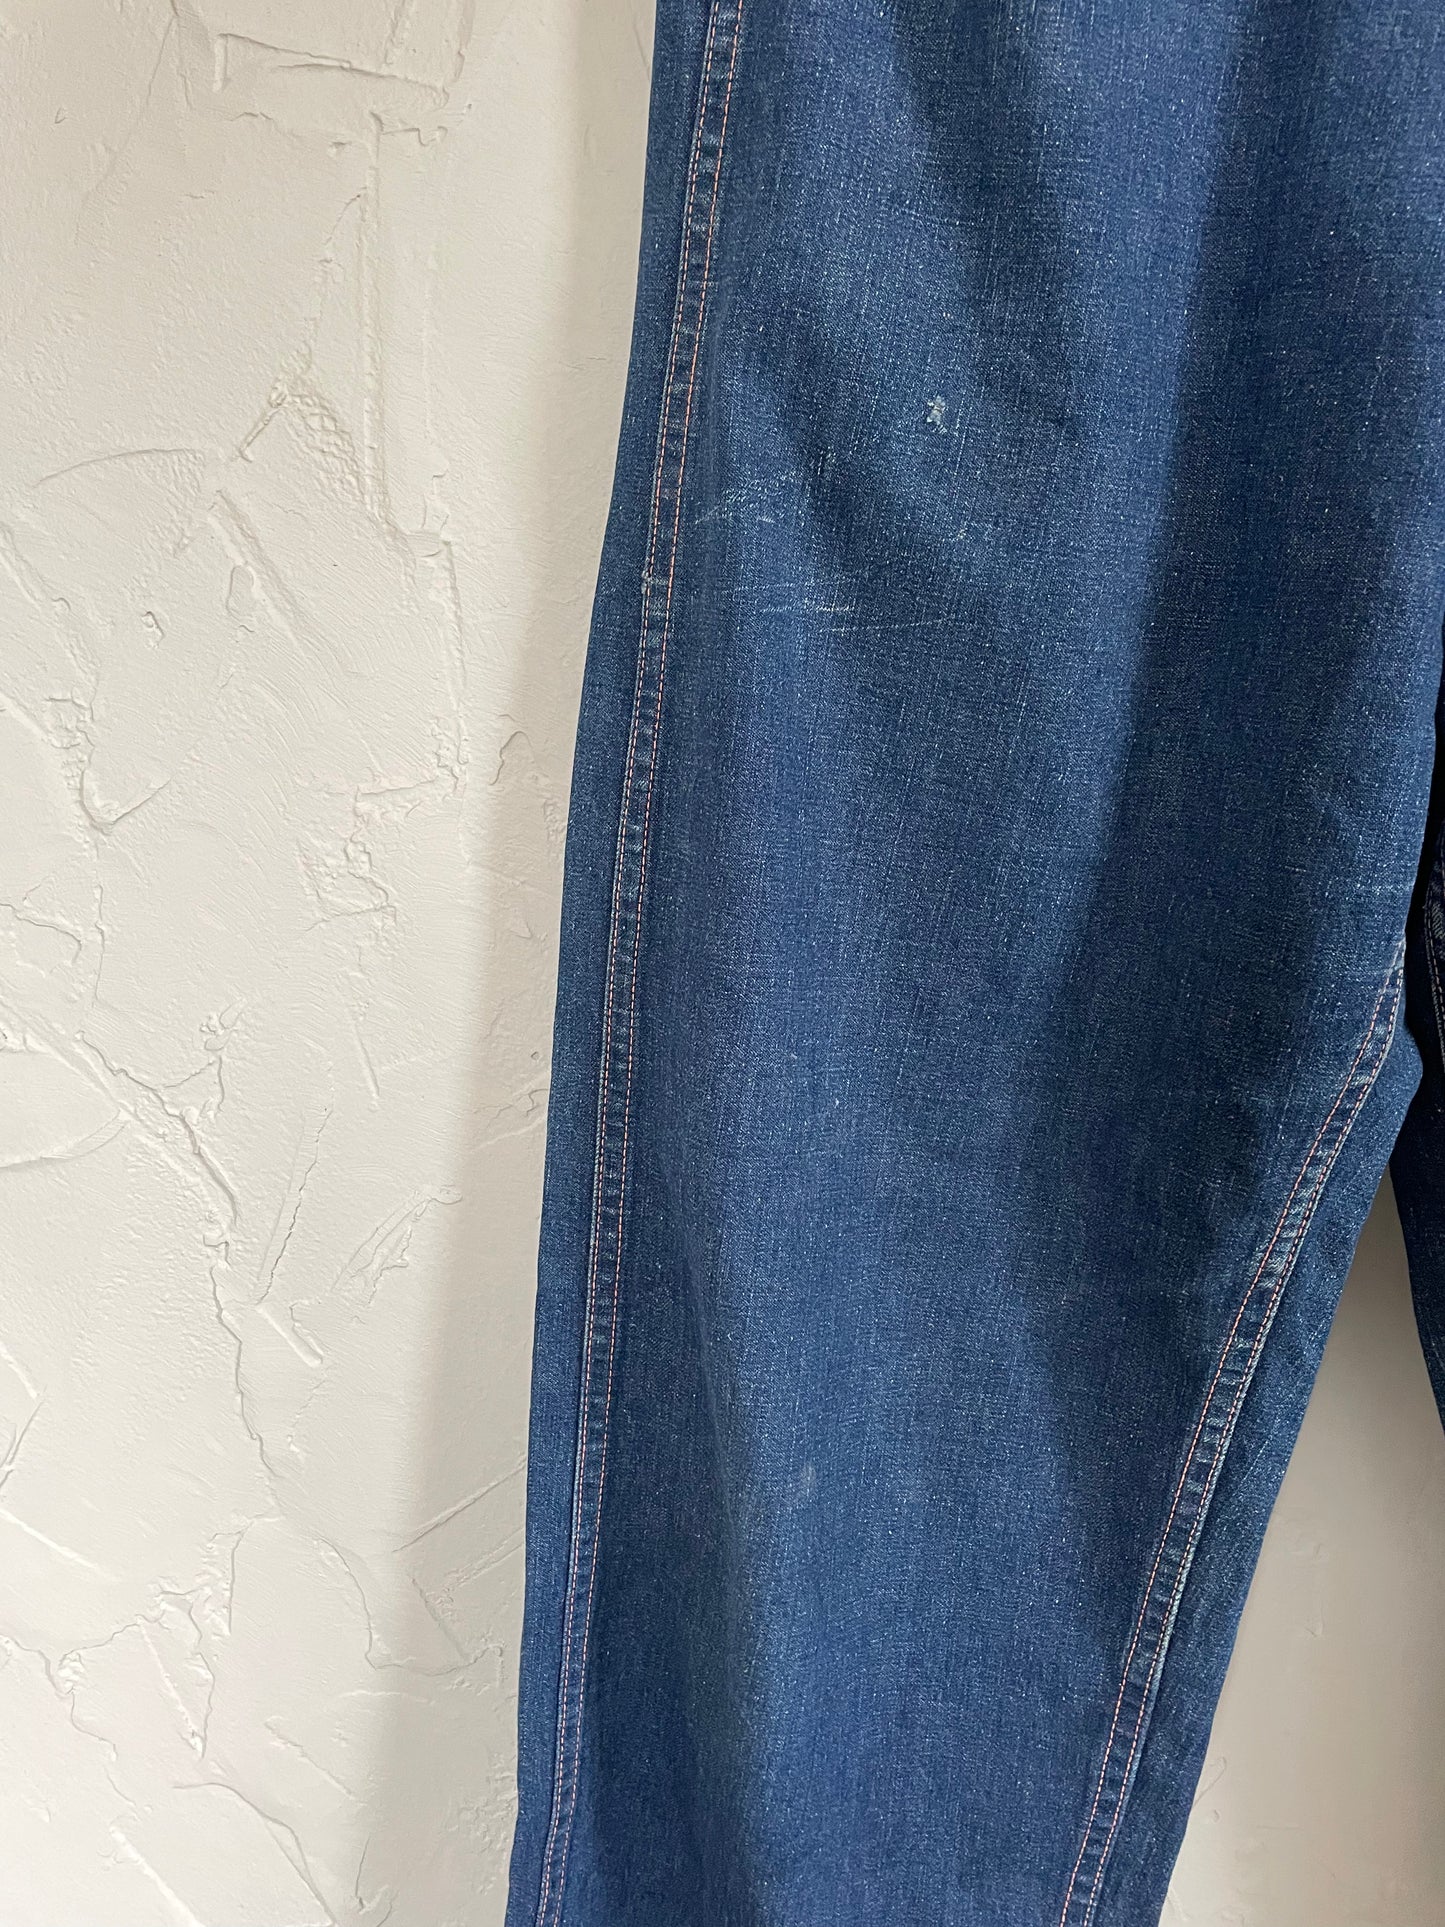 50s Ranchcraft Side Zip Jeans